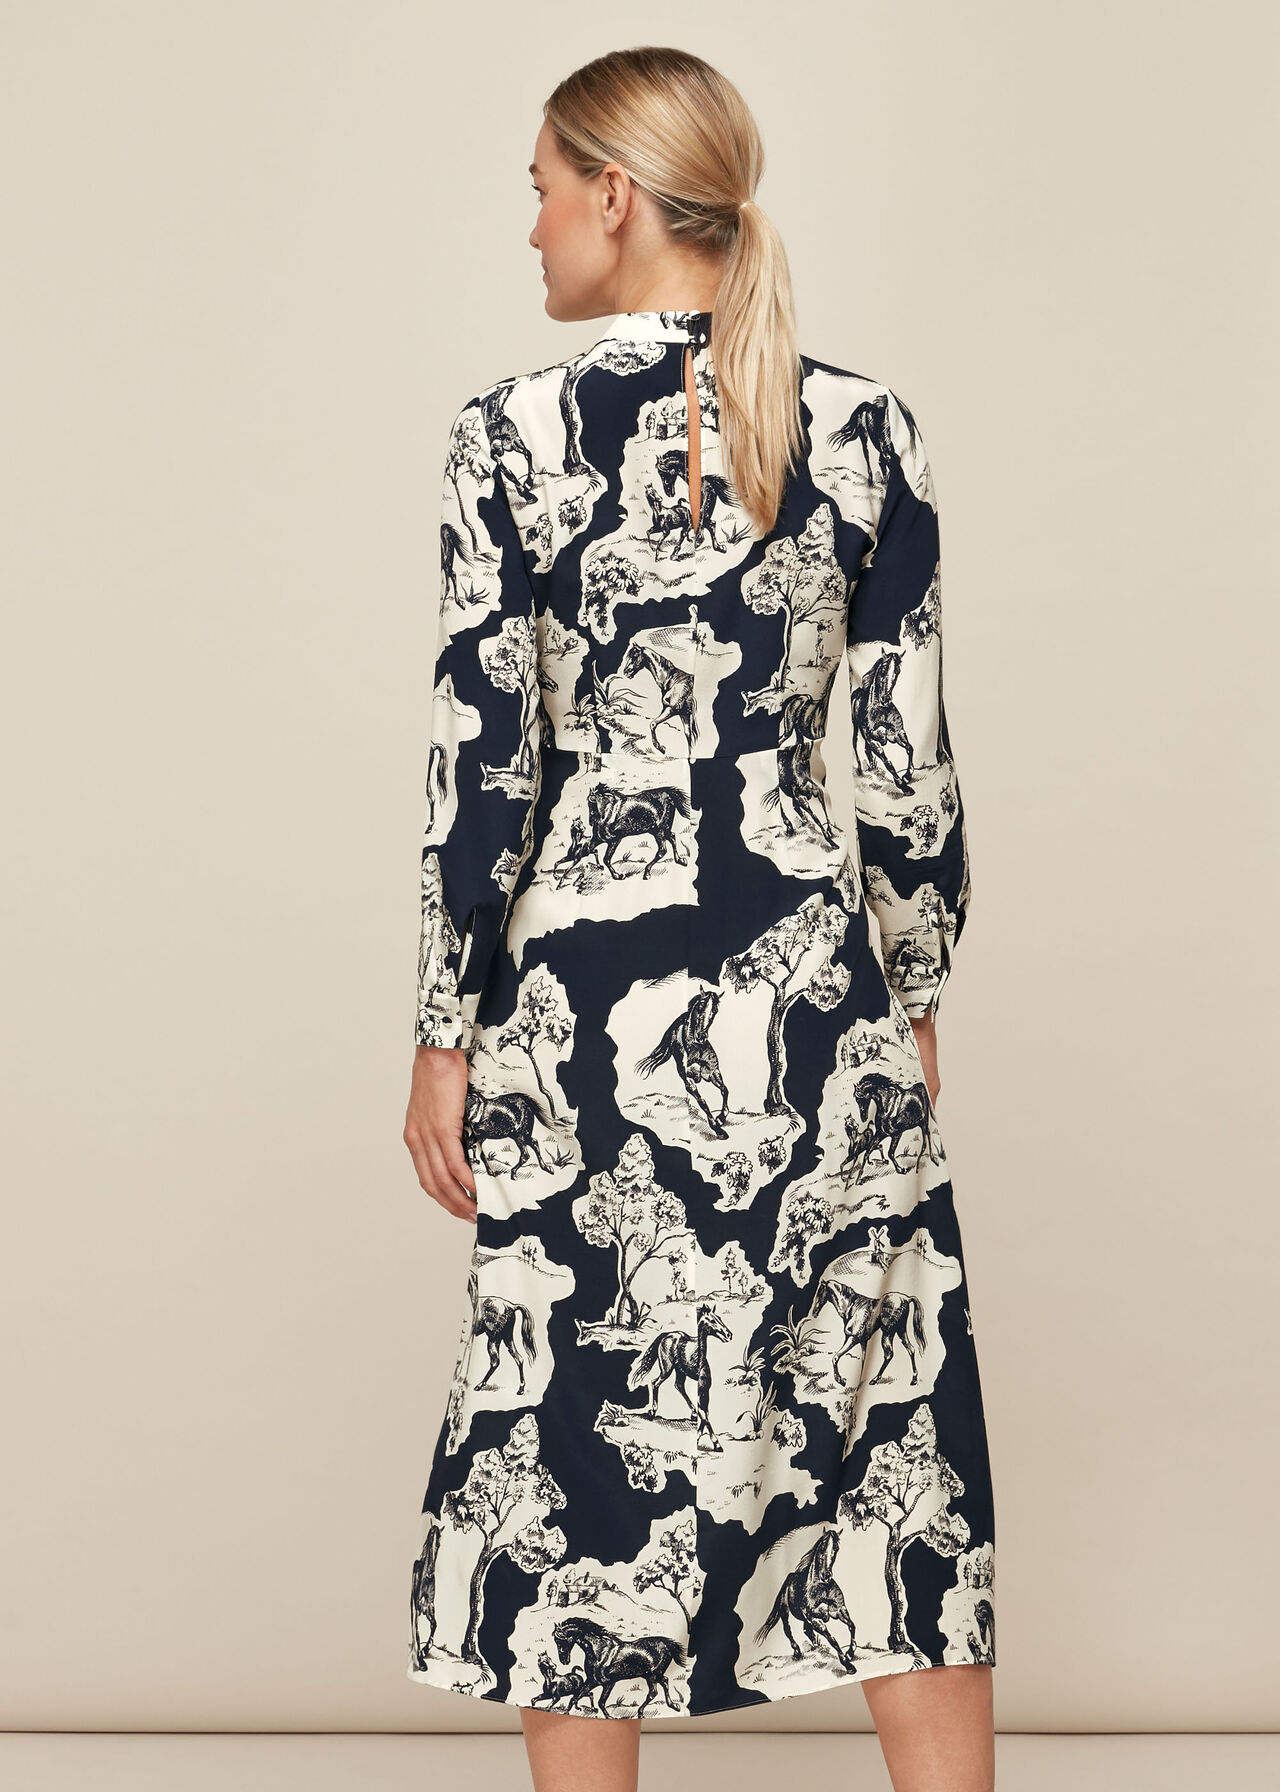 Stallion Print Silk Dress